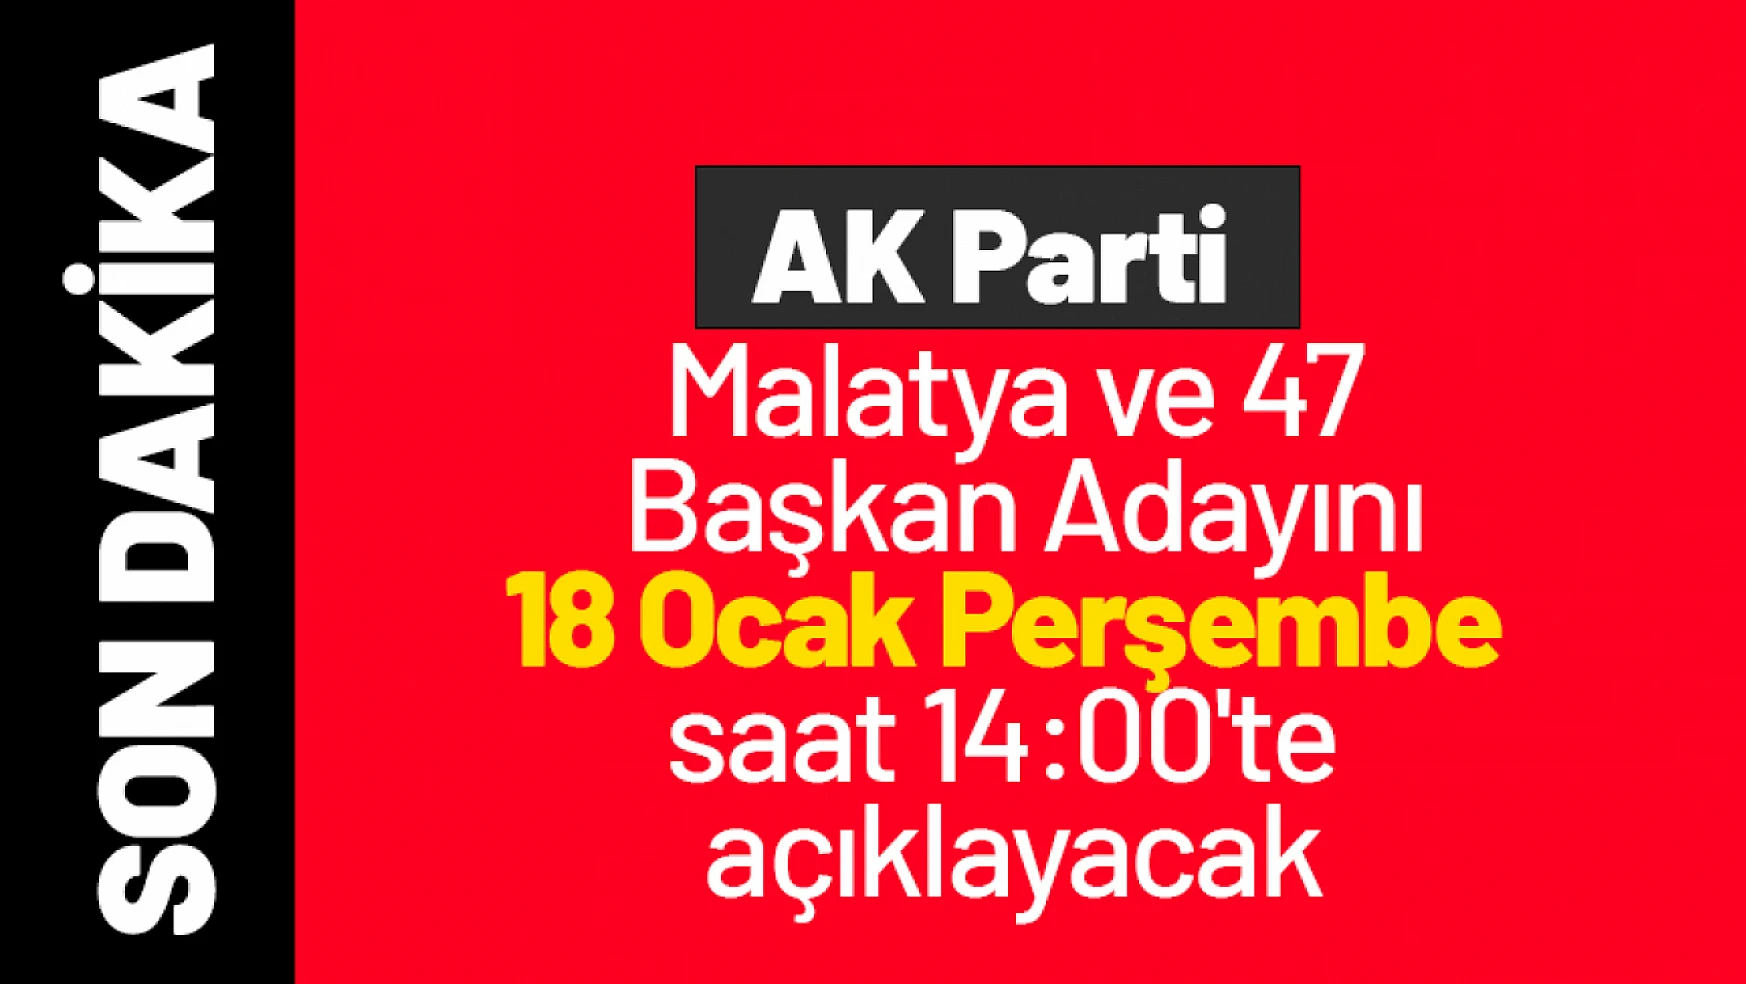 AK Parti Aday Tanıtım Toplantısı 18 Ocak'ta!